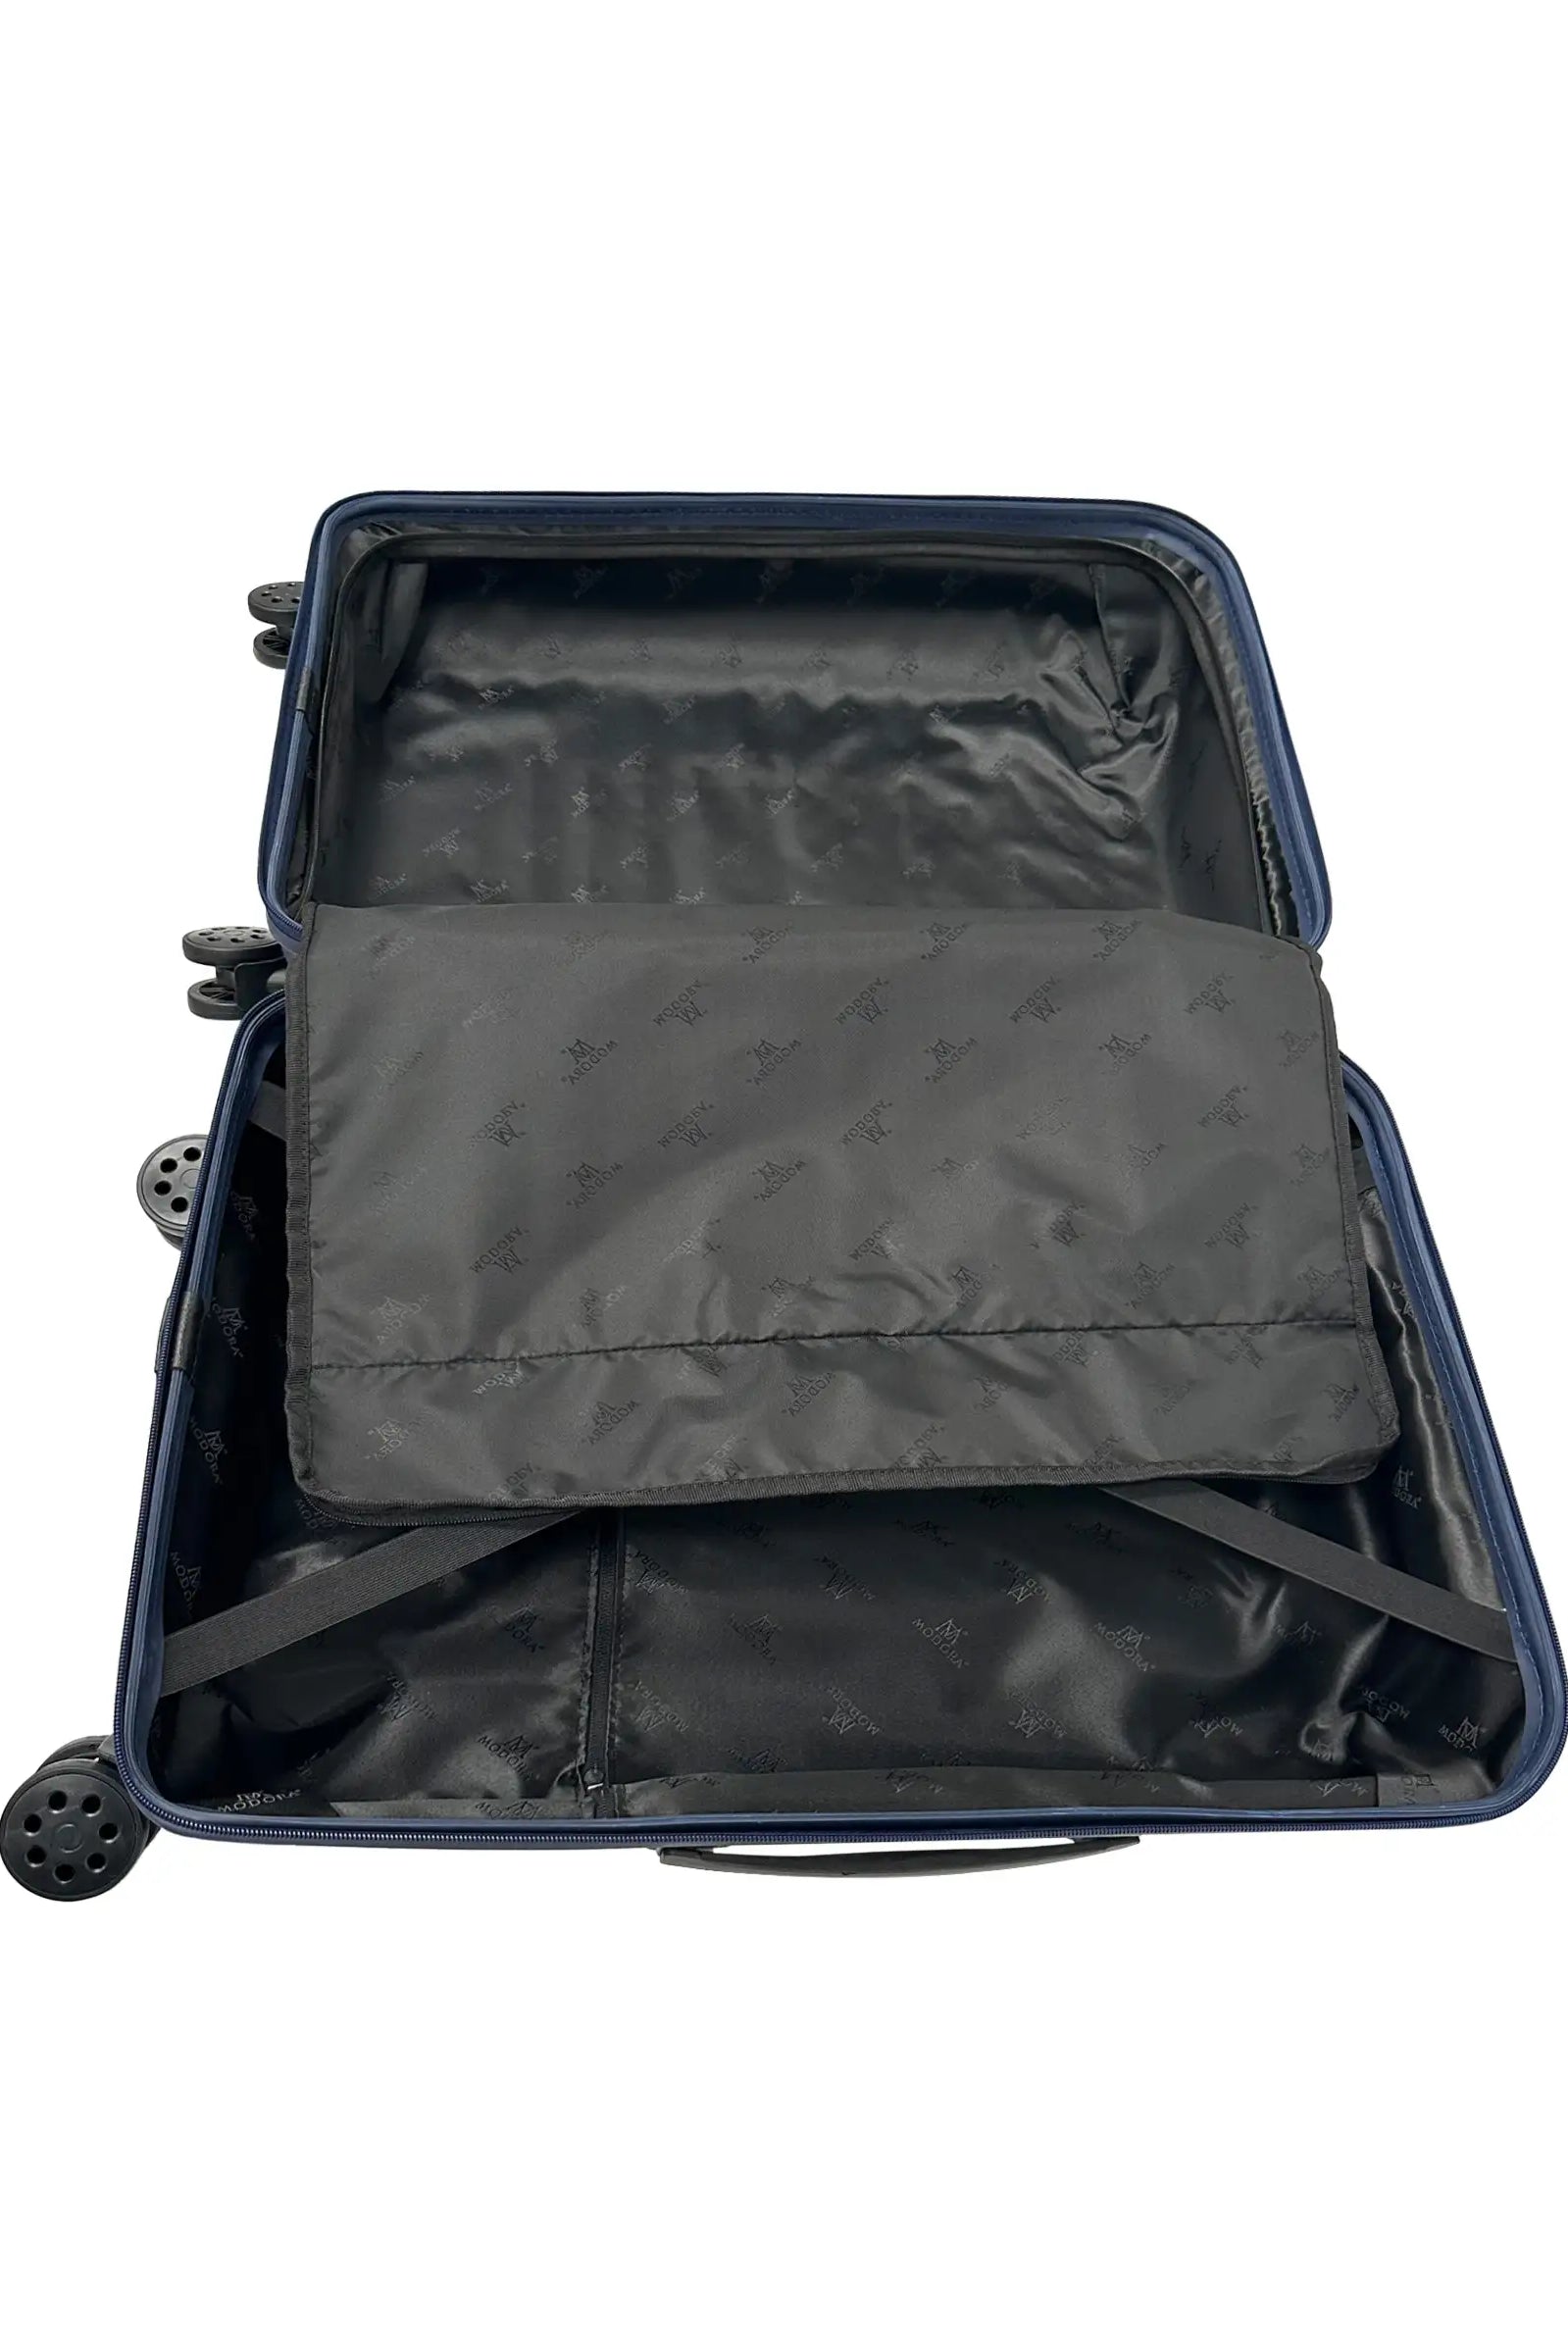 medium navy suitcase uk